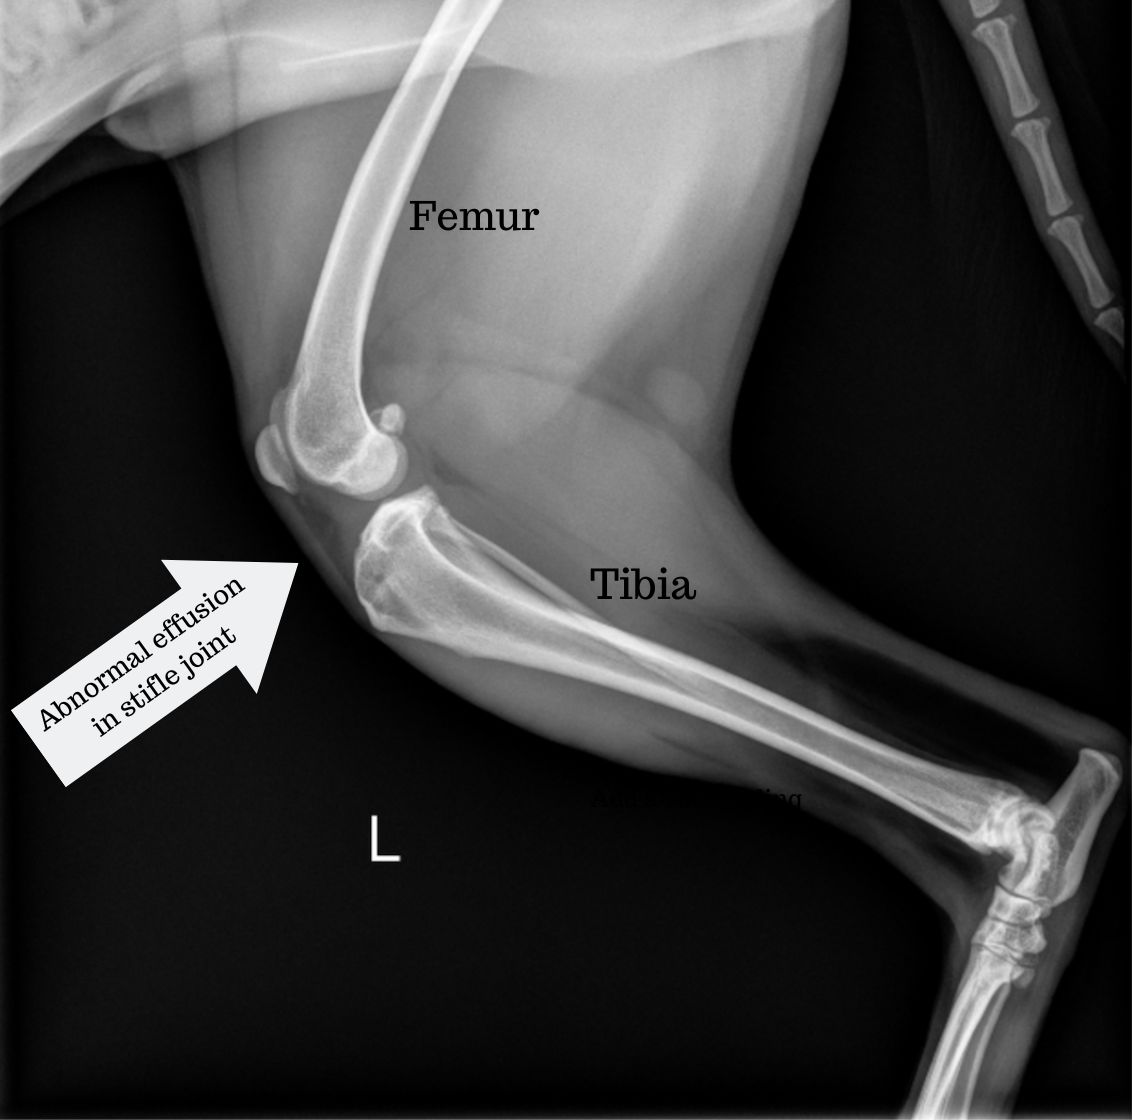 Left leg X-ray